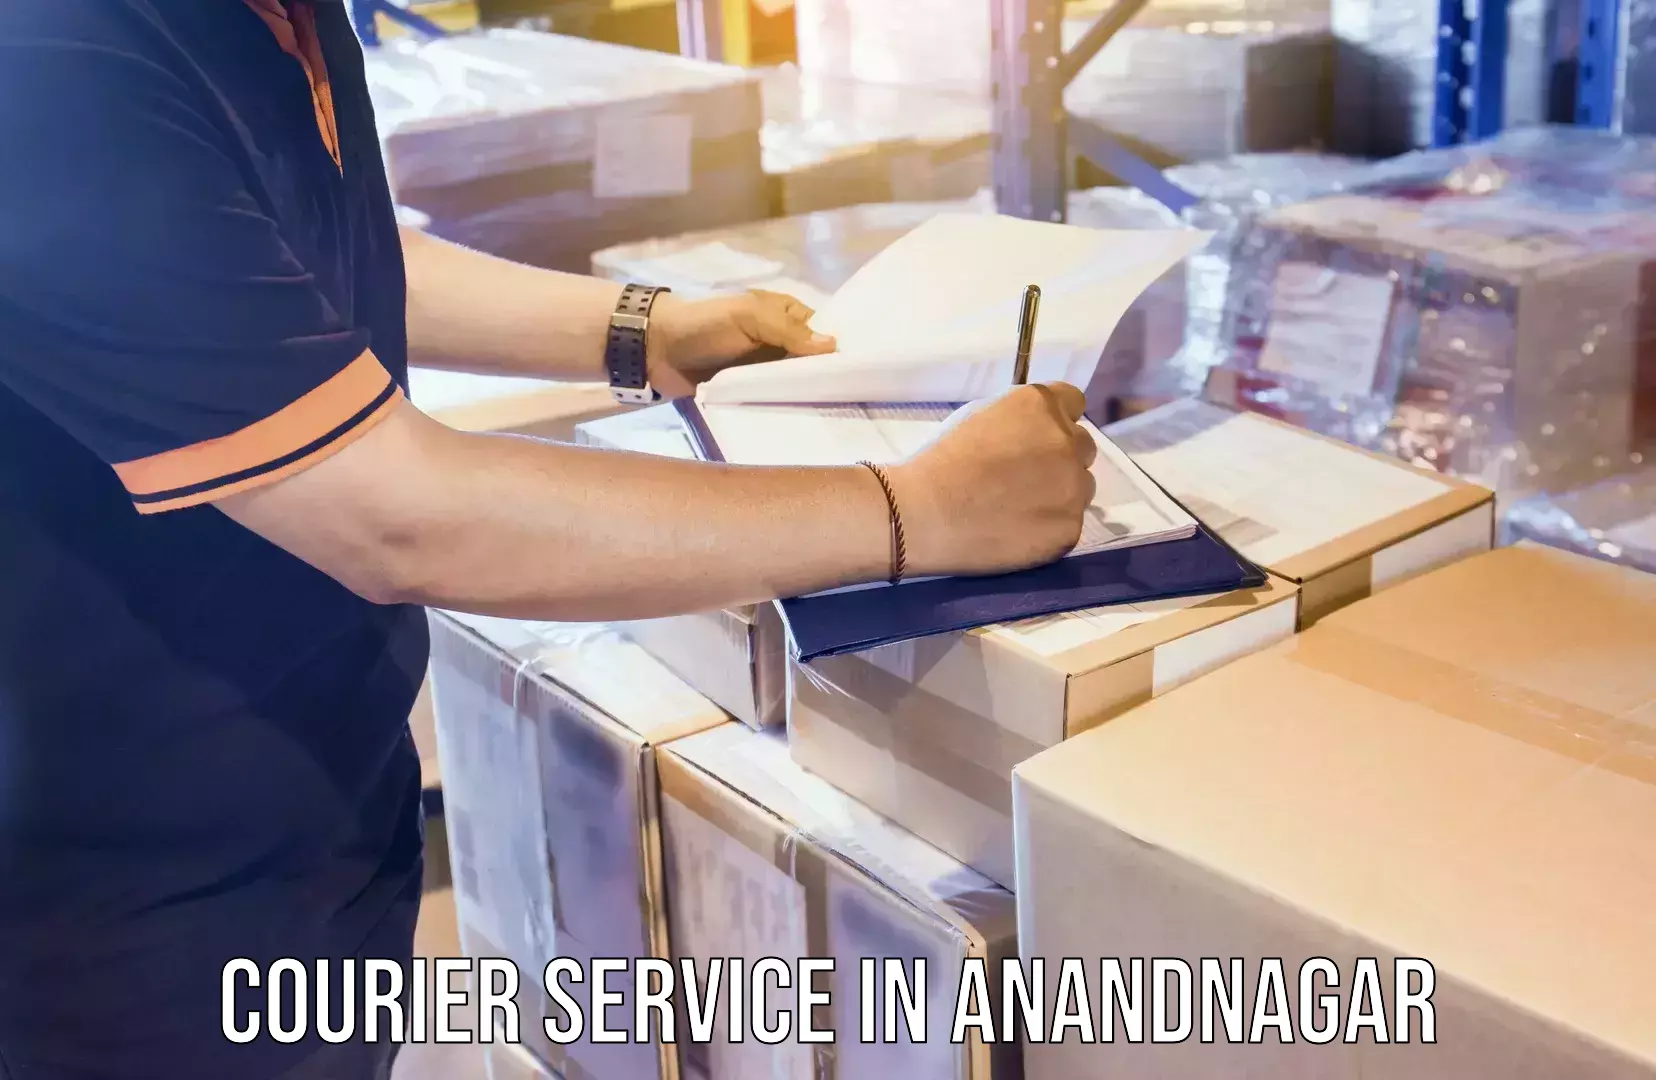 Short distance delivery in Anandnagar